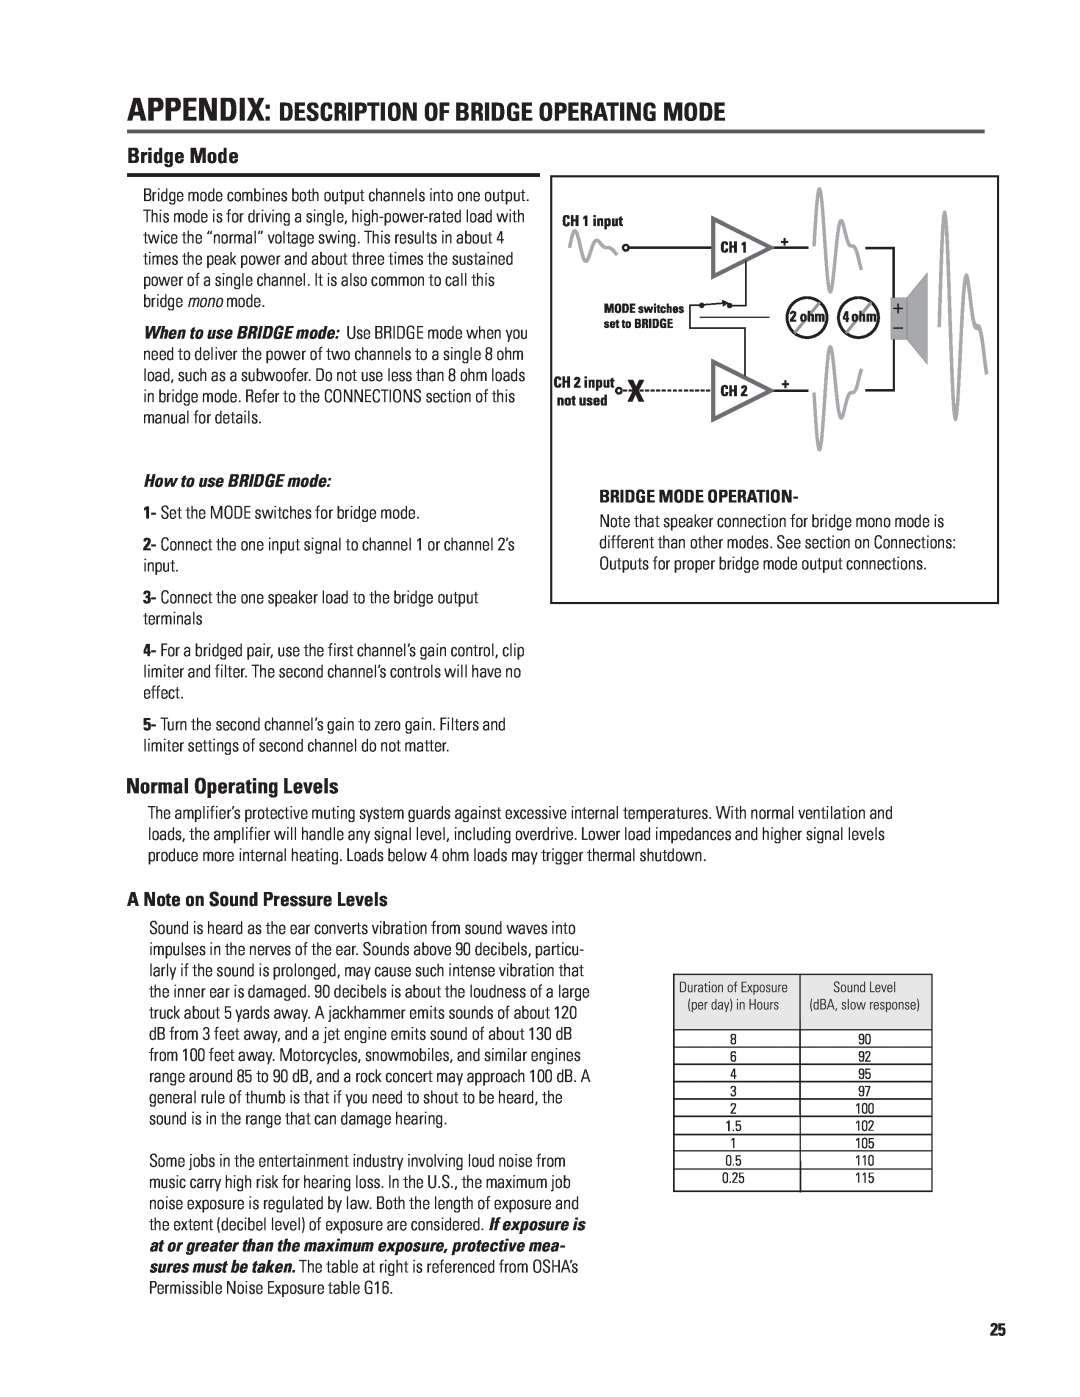 QSC Audio CX168 Appendix Description Of Bridge Operating Mode, Normal Operating Levels, A Note on Sound Pressure Levels 